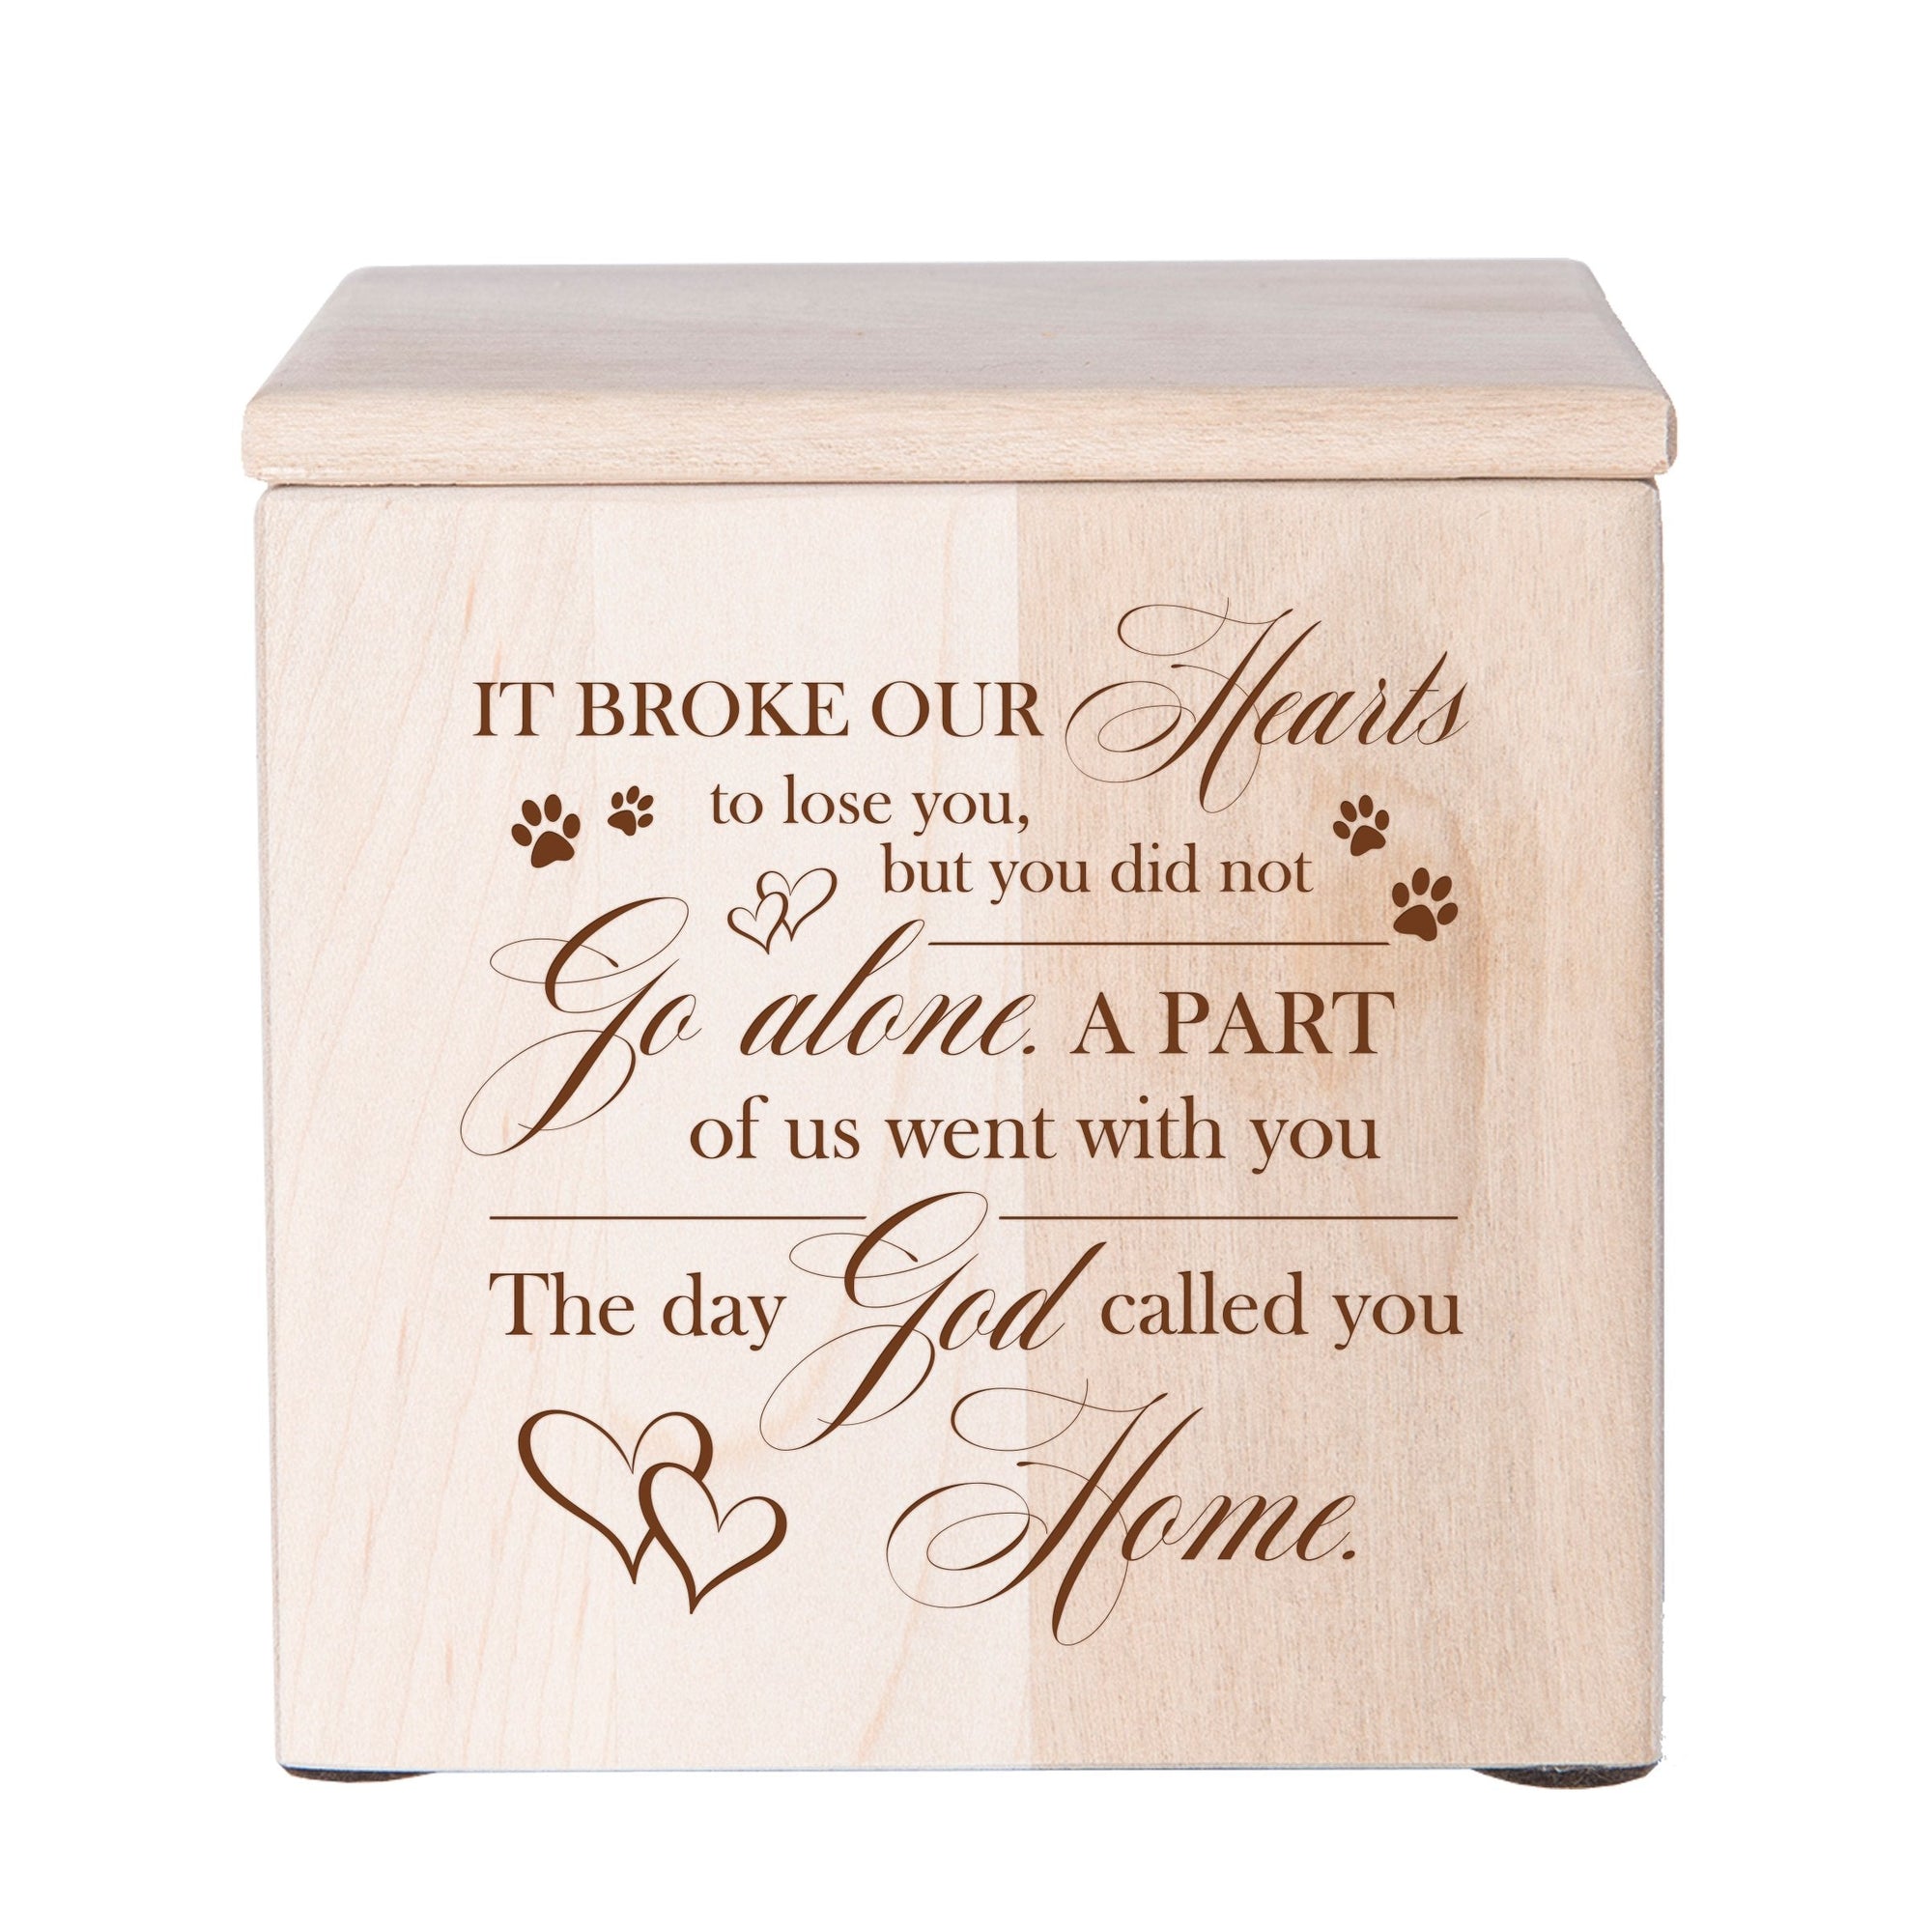 Maple Pet Memorial 3.5x3.5 Keepsake Urn with phrase "It Broke Our Hearts"